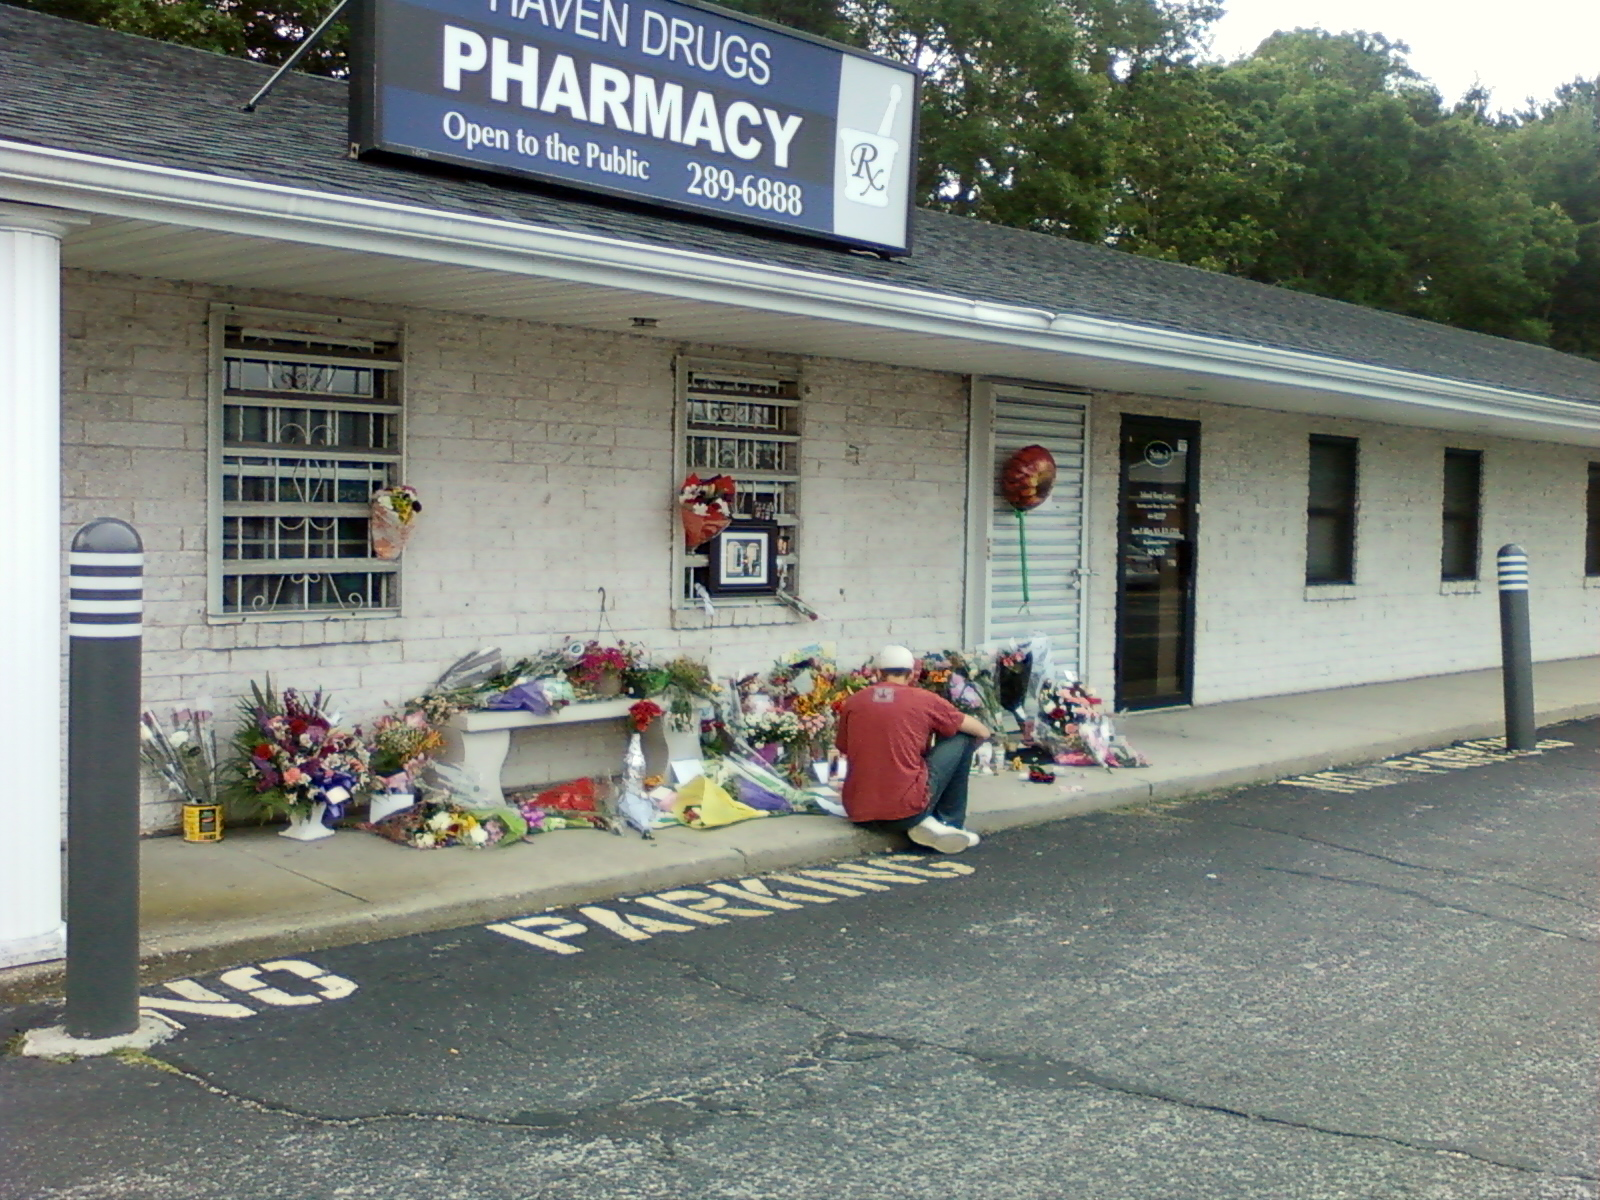 A makeshift memorial at Haven Drugs - Medford, NY - Jun 22, 2011 (credit: Mike Xirinachs / WCBS 880)